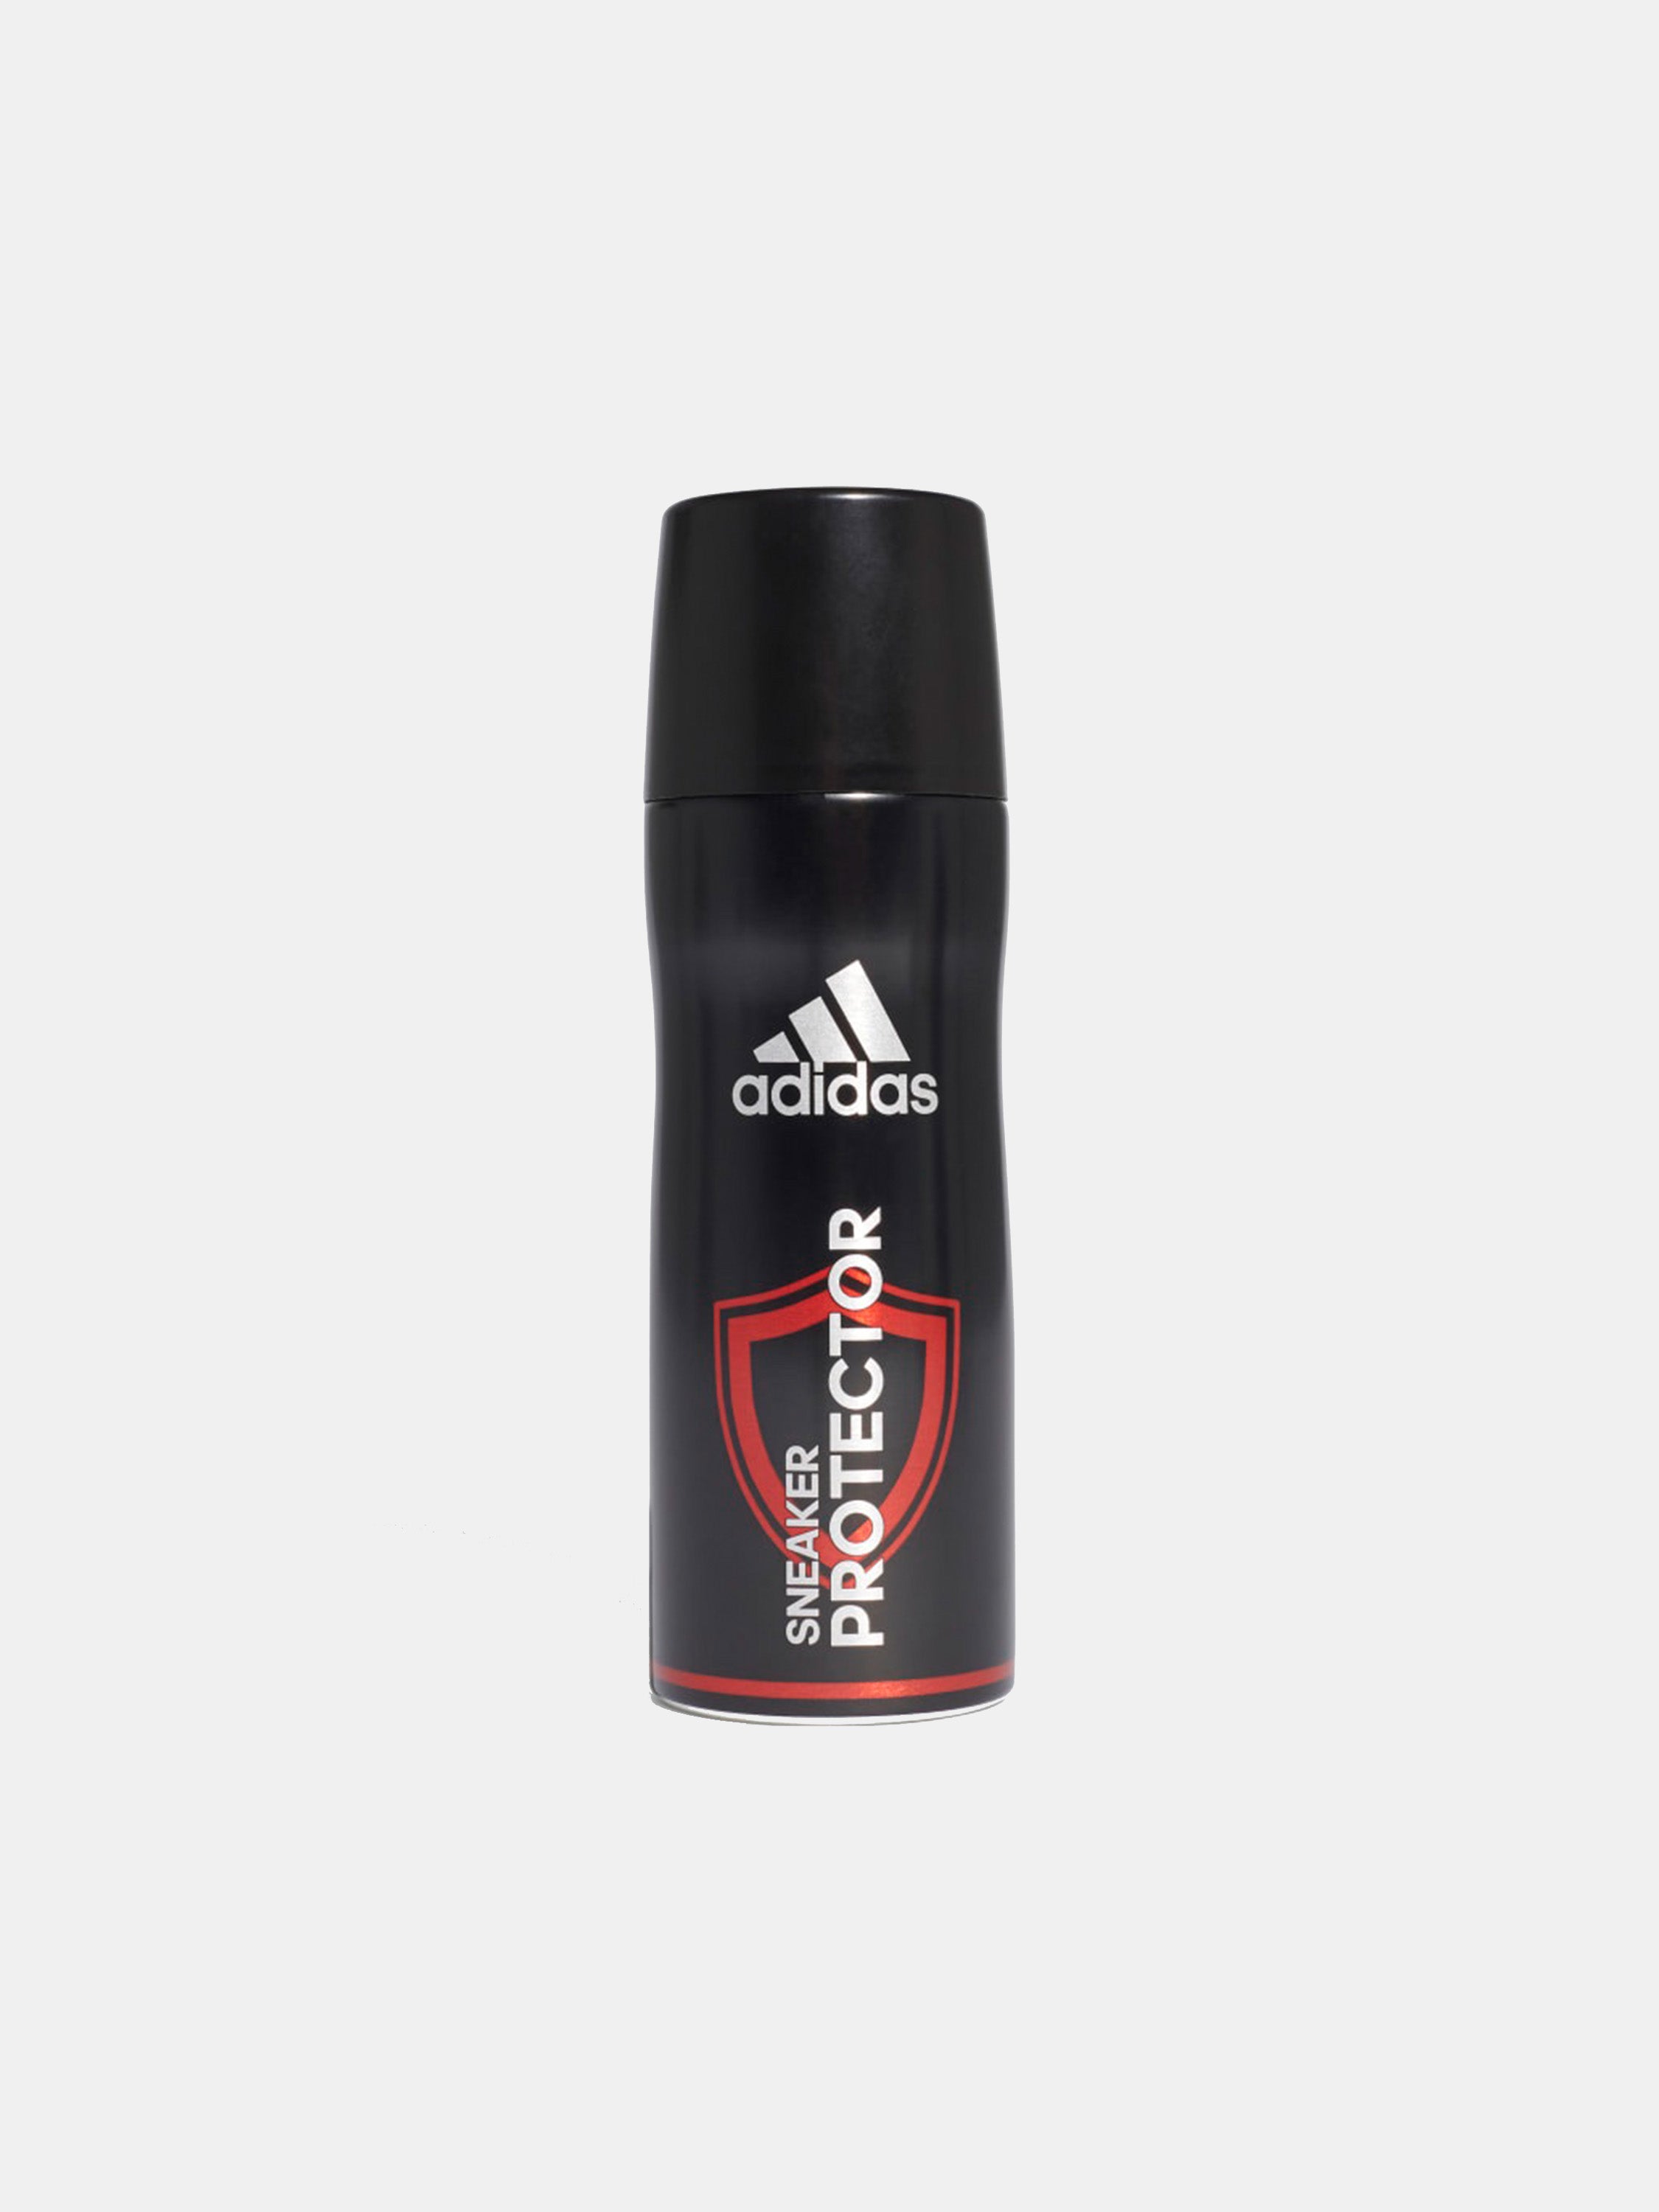 Adidas Sneaker Protector - 200ml